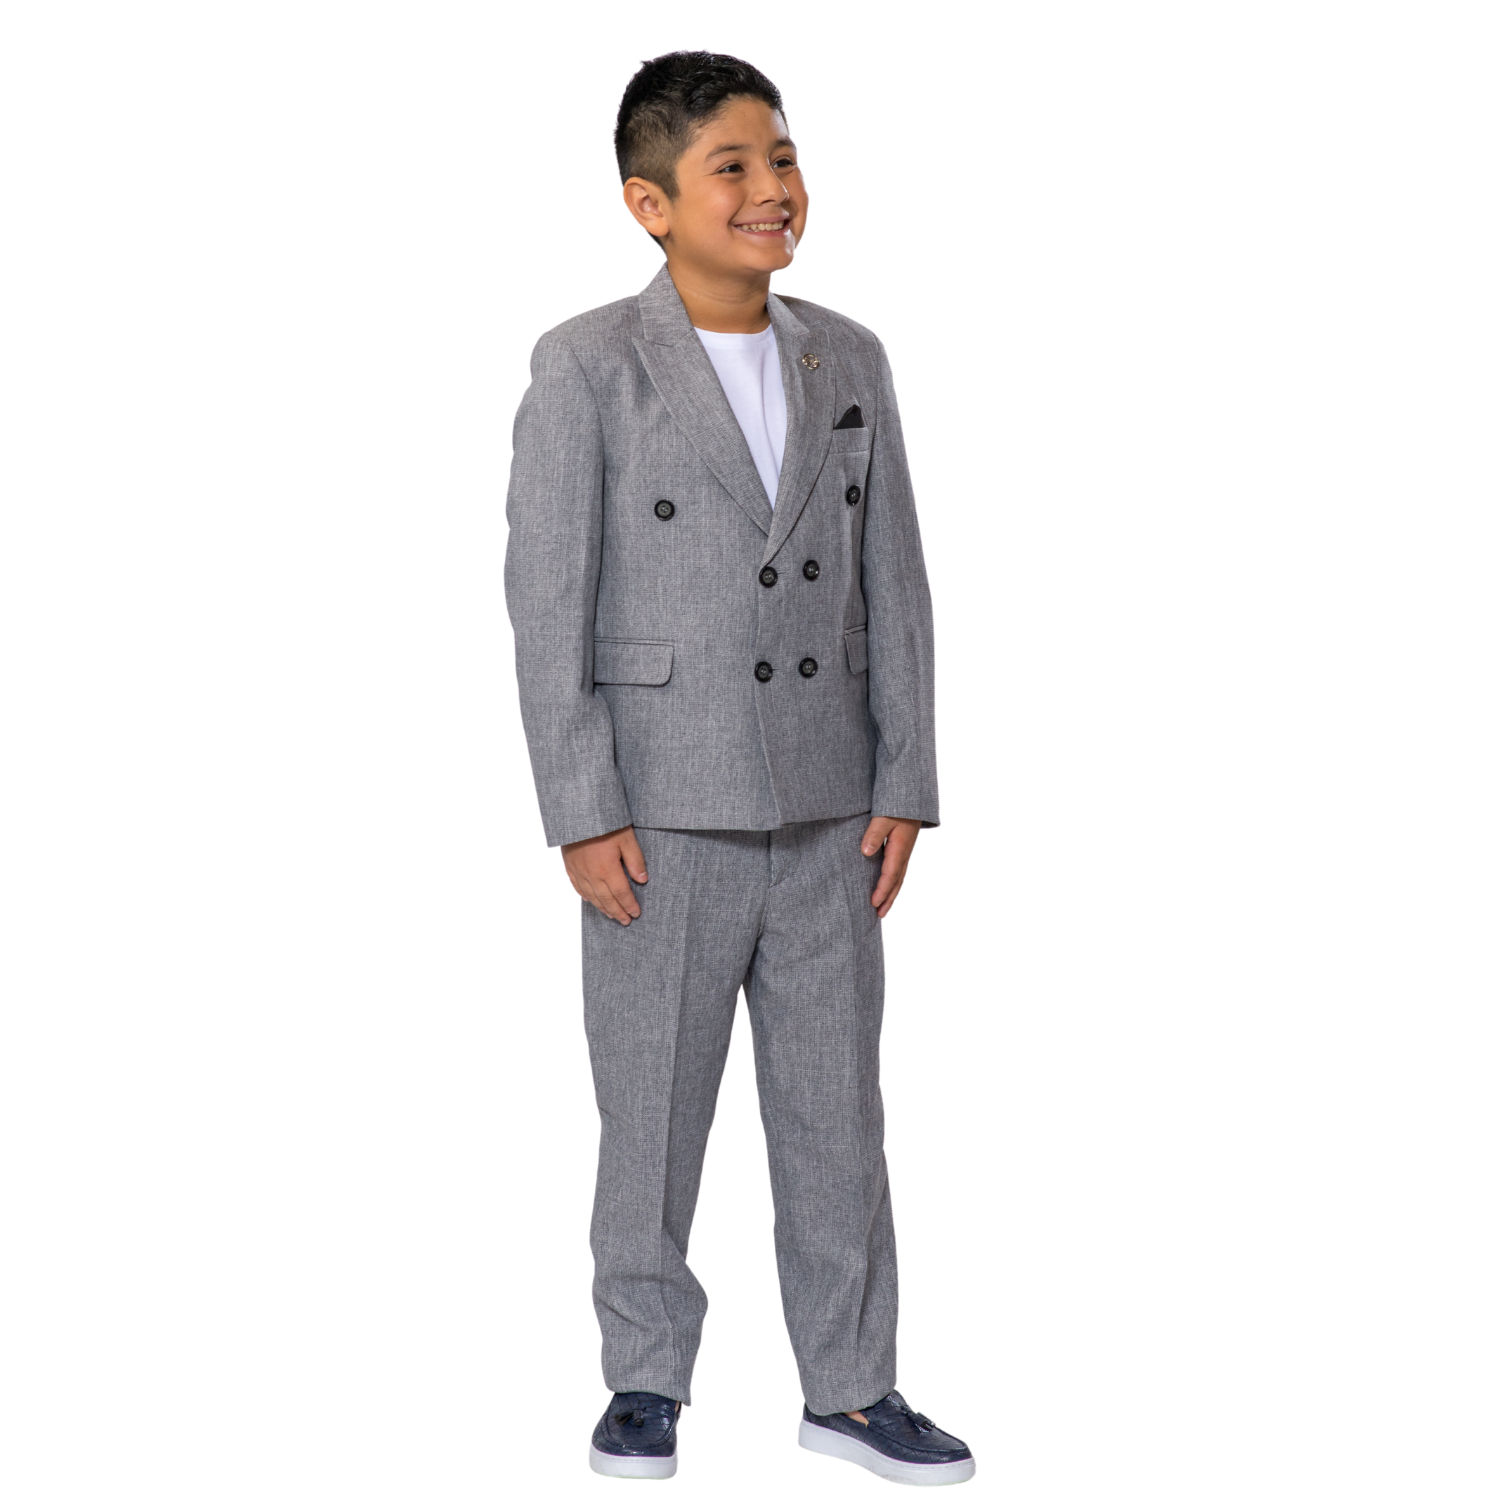 Cool School Boys Formal Suit